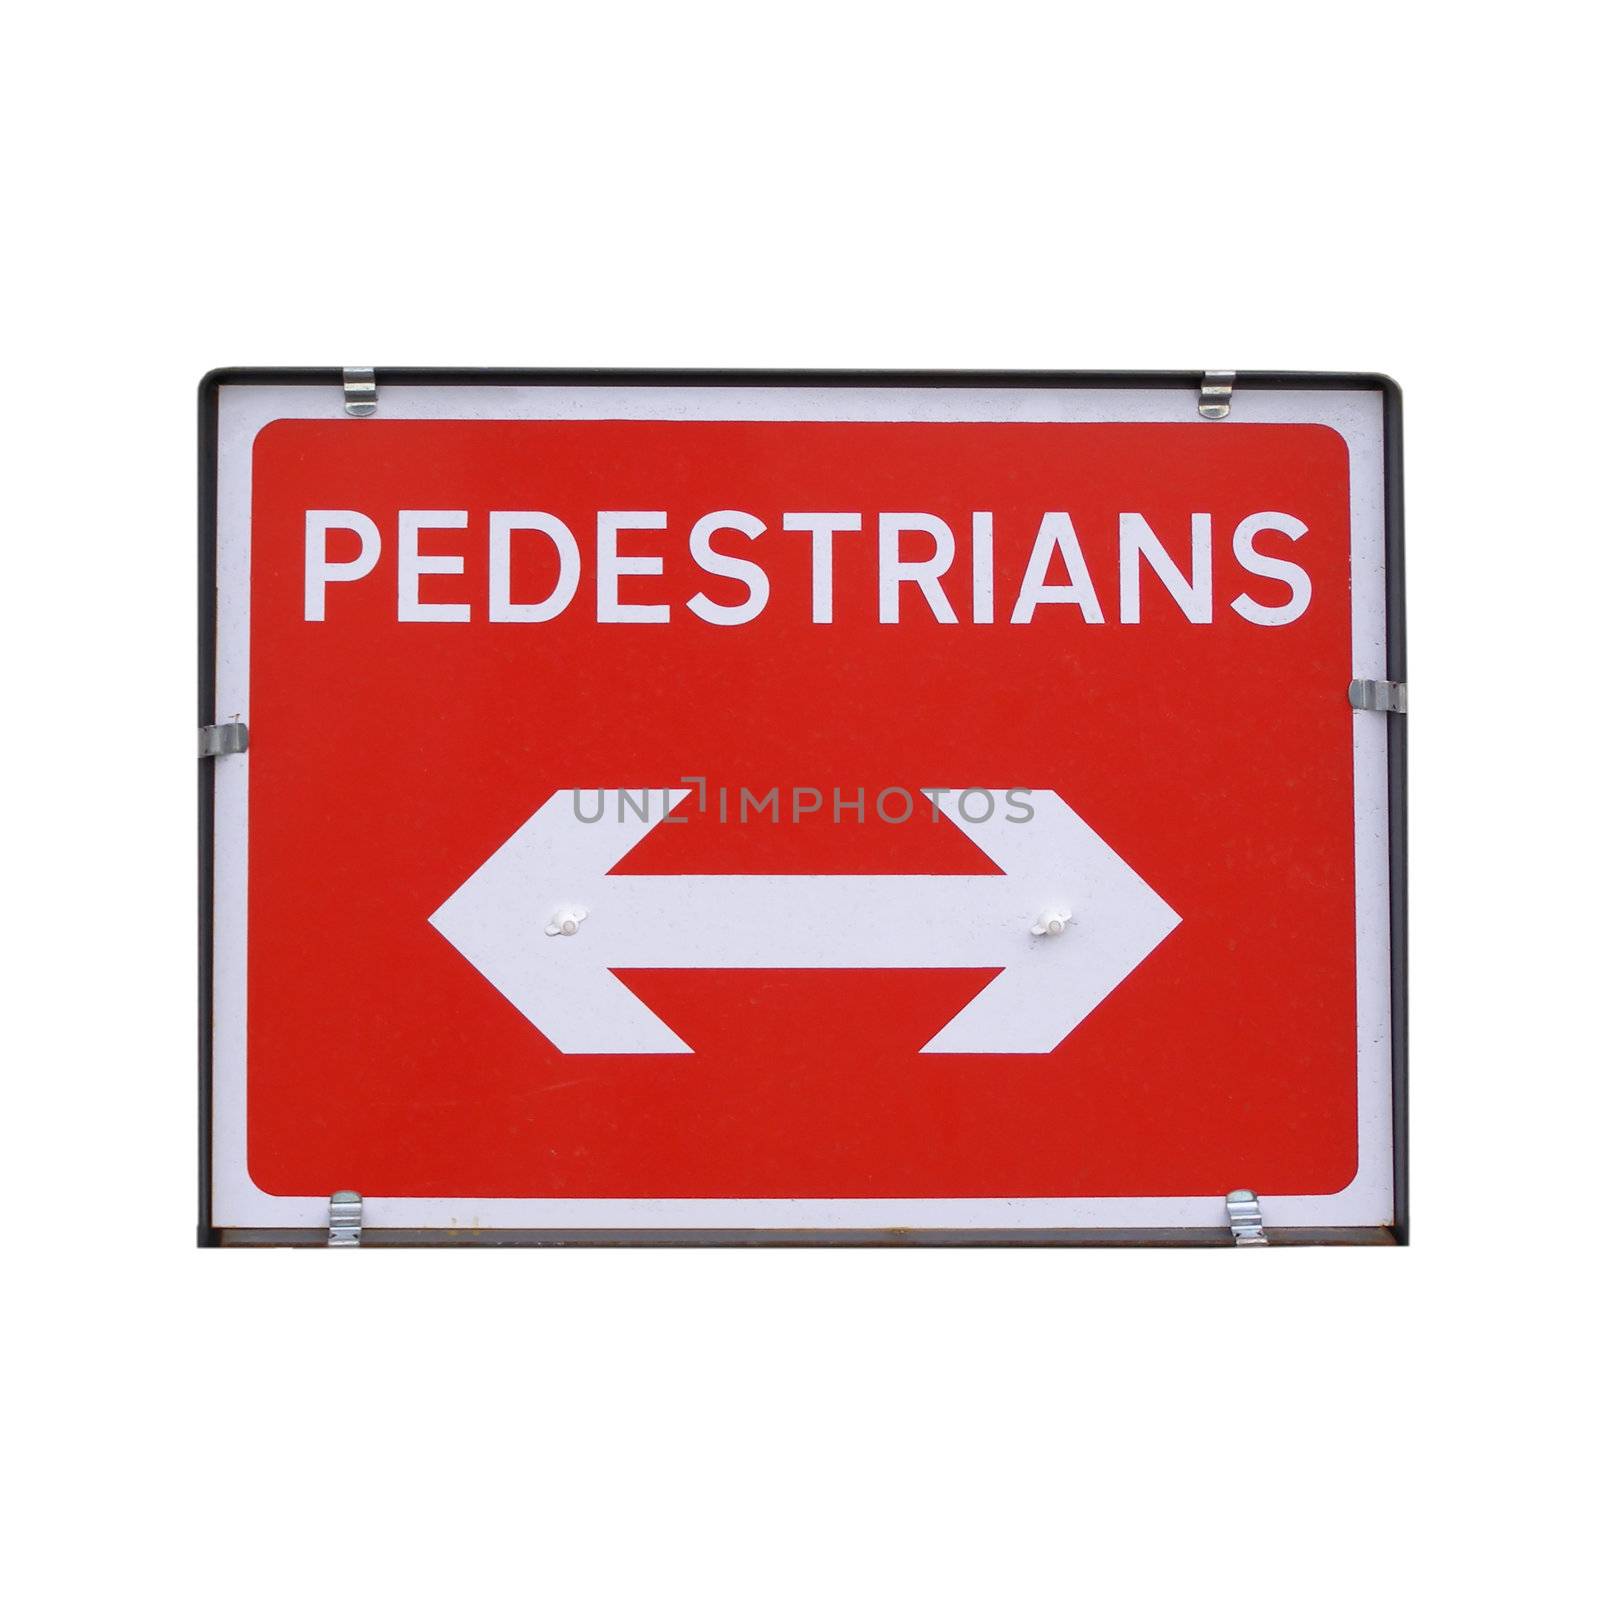 Pedestrian sign by claudiodivizia